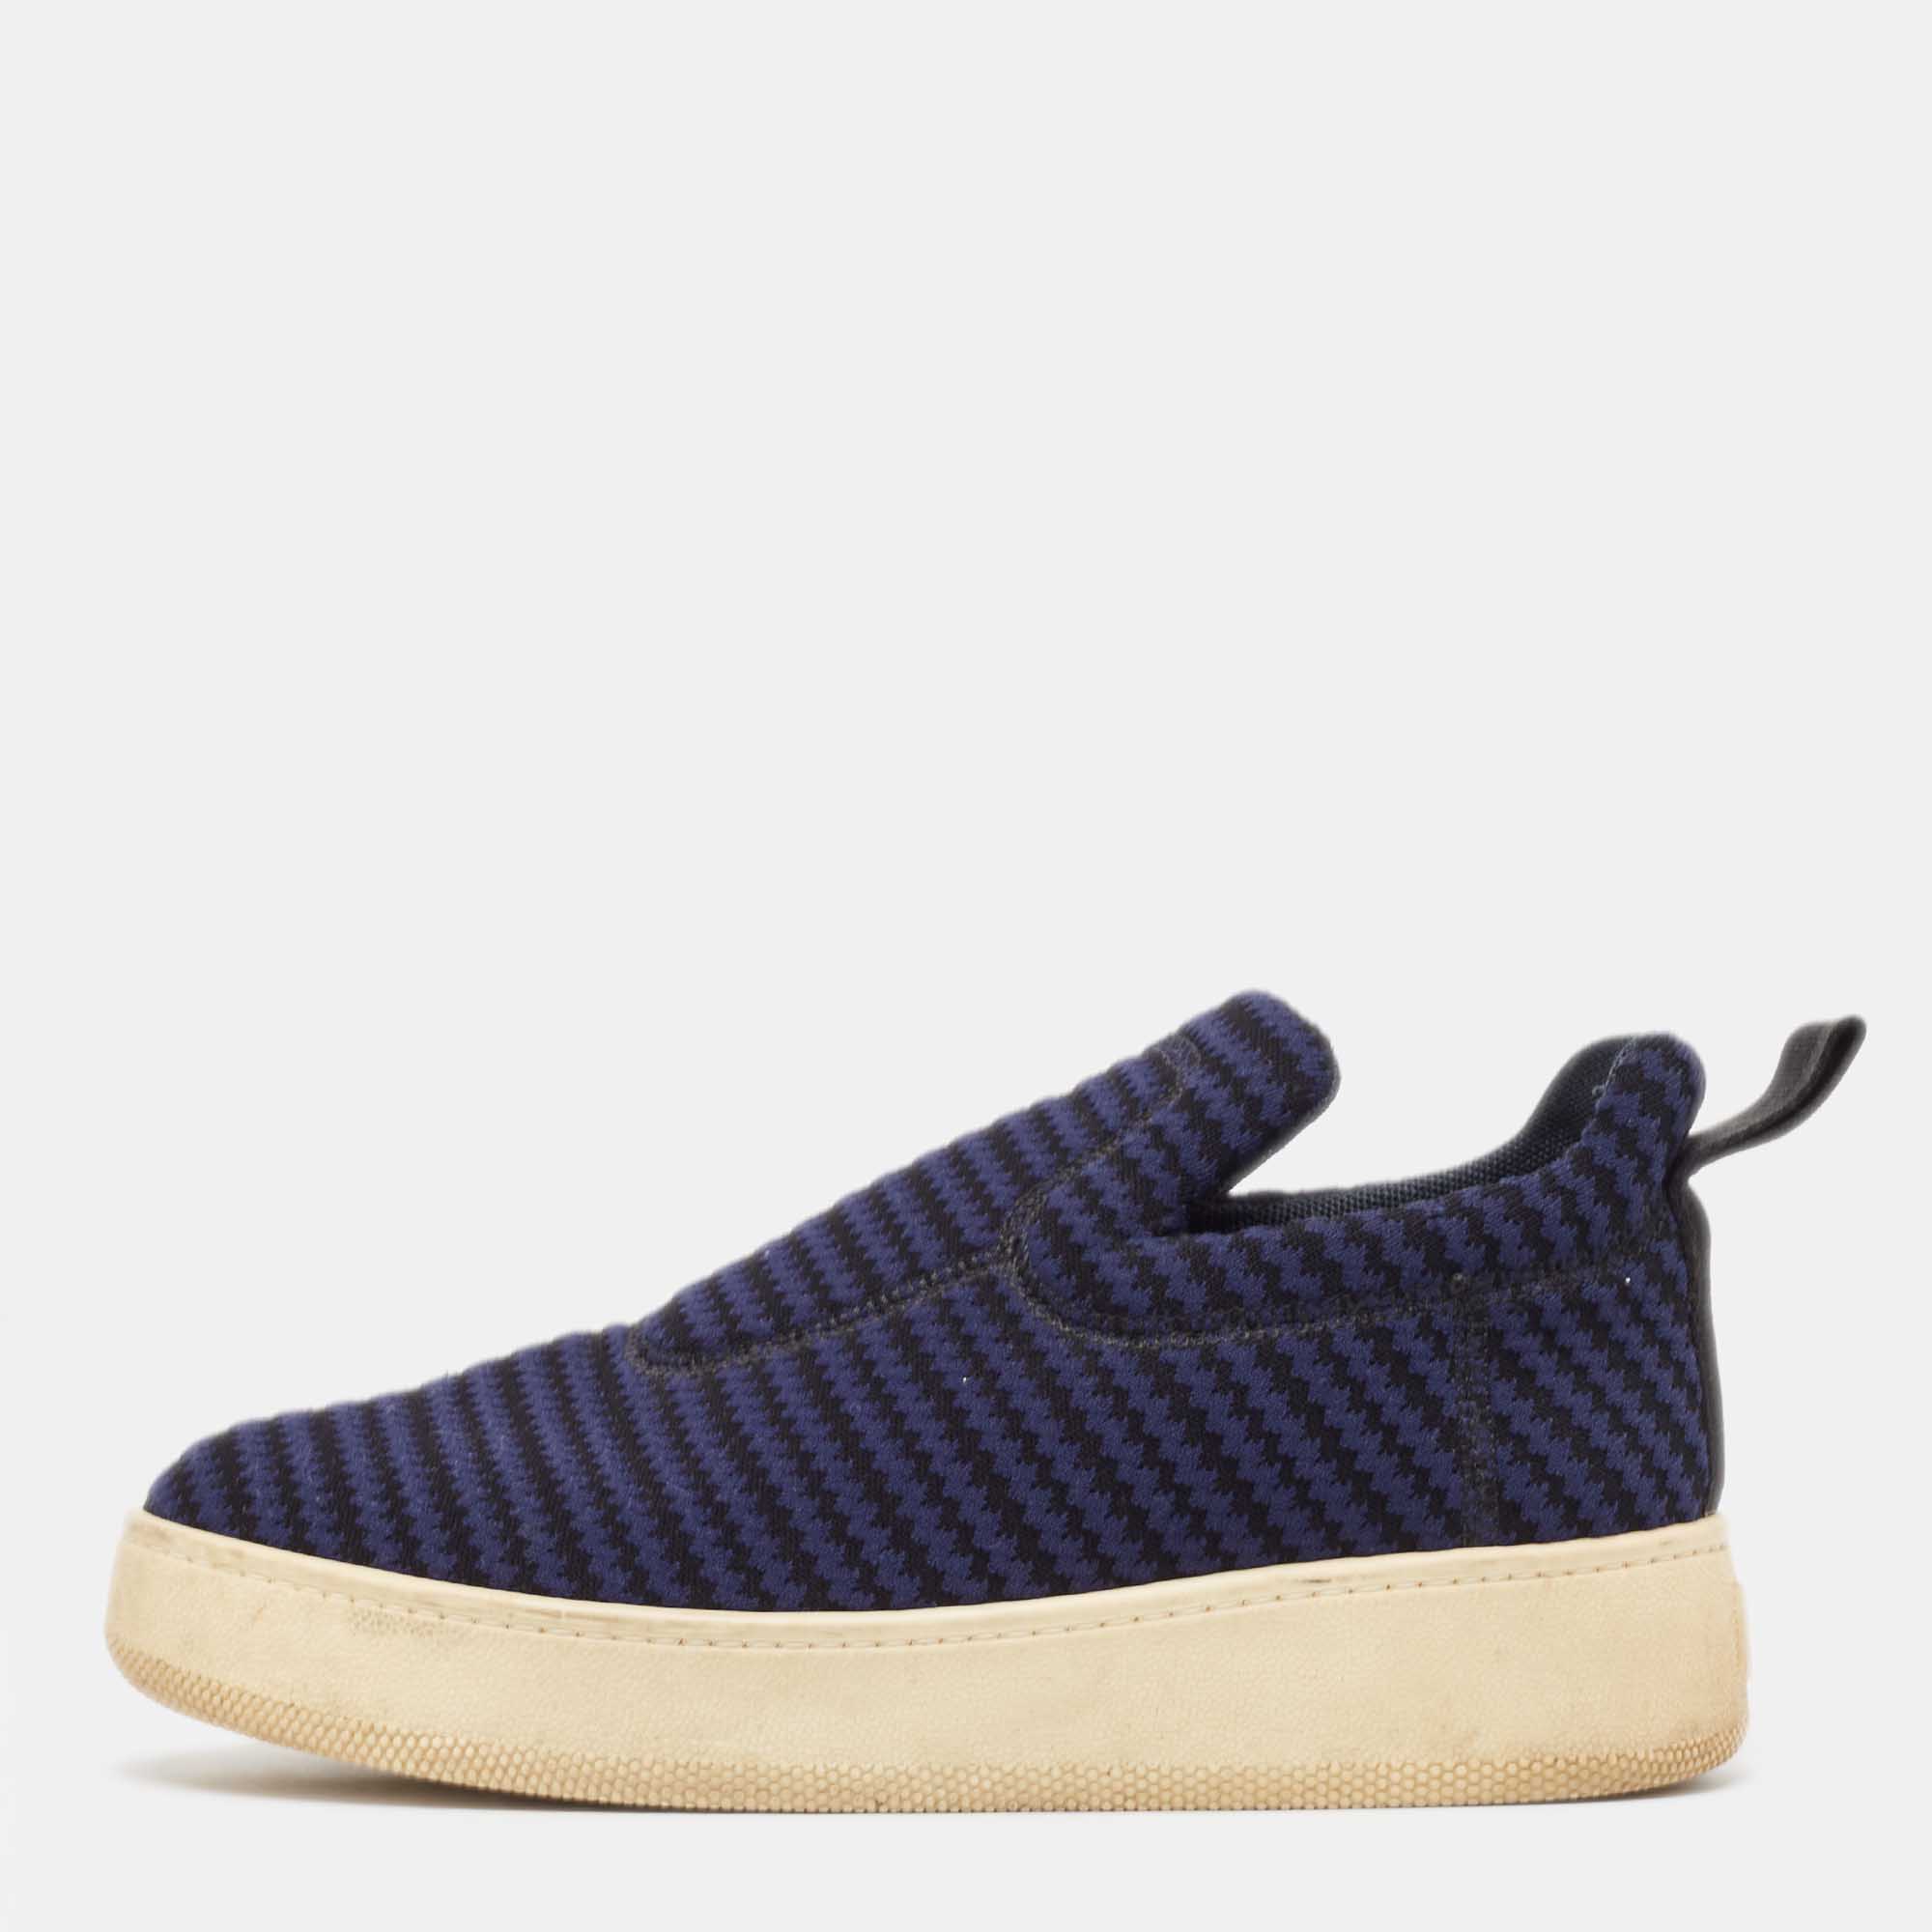 Celine navy blue/black canvas platform slip on sneakers size 38